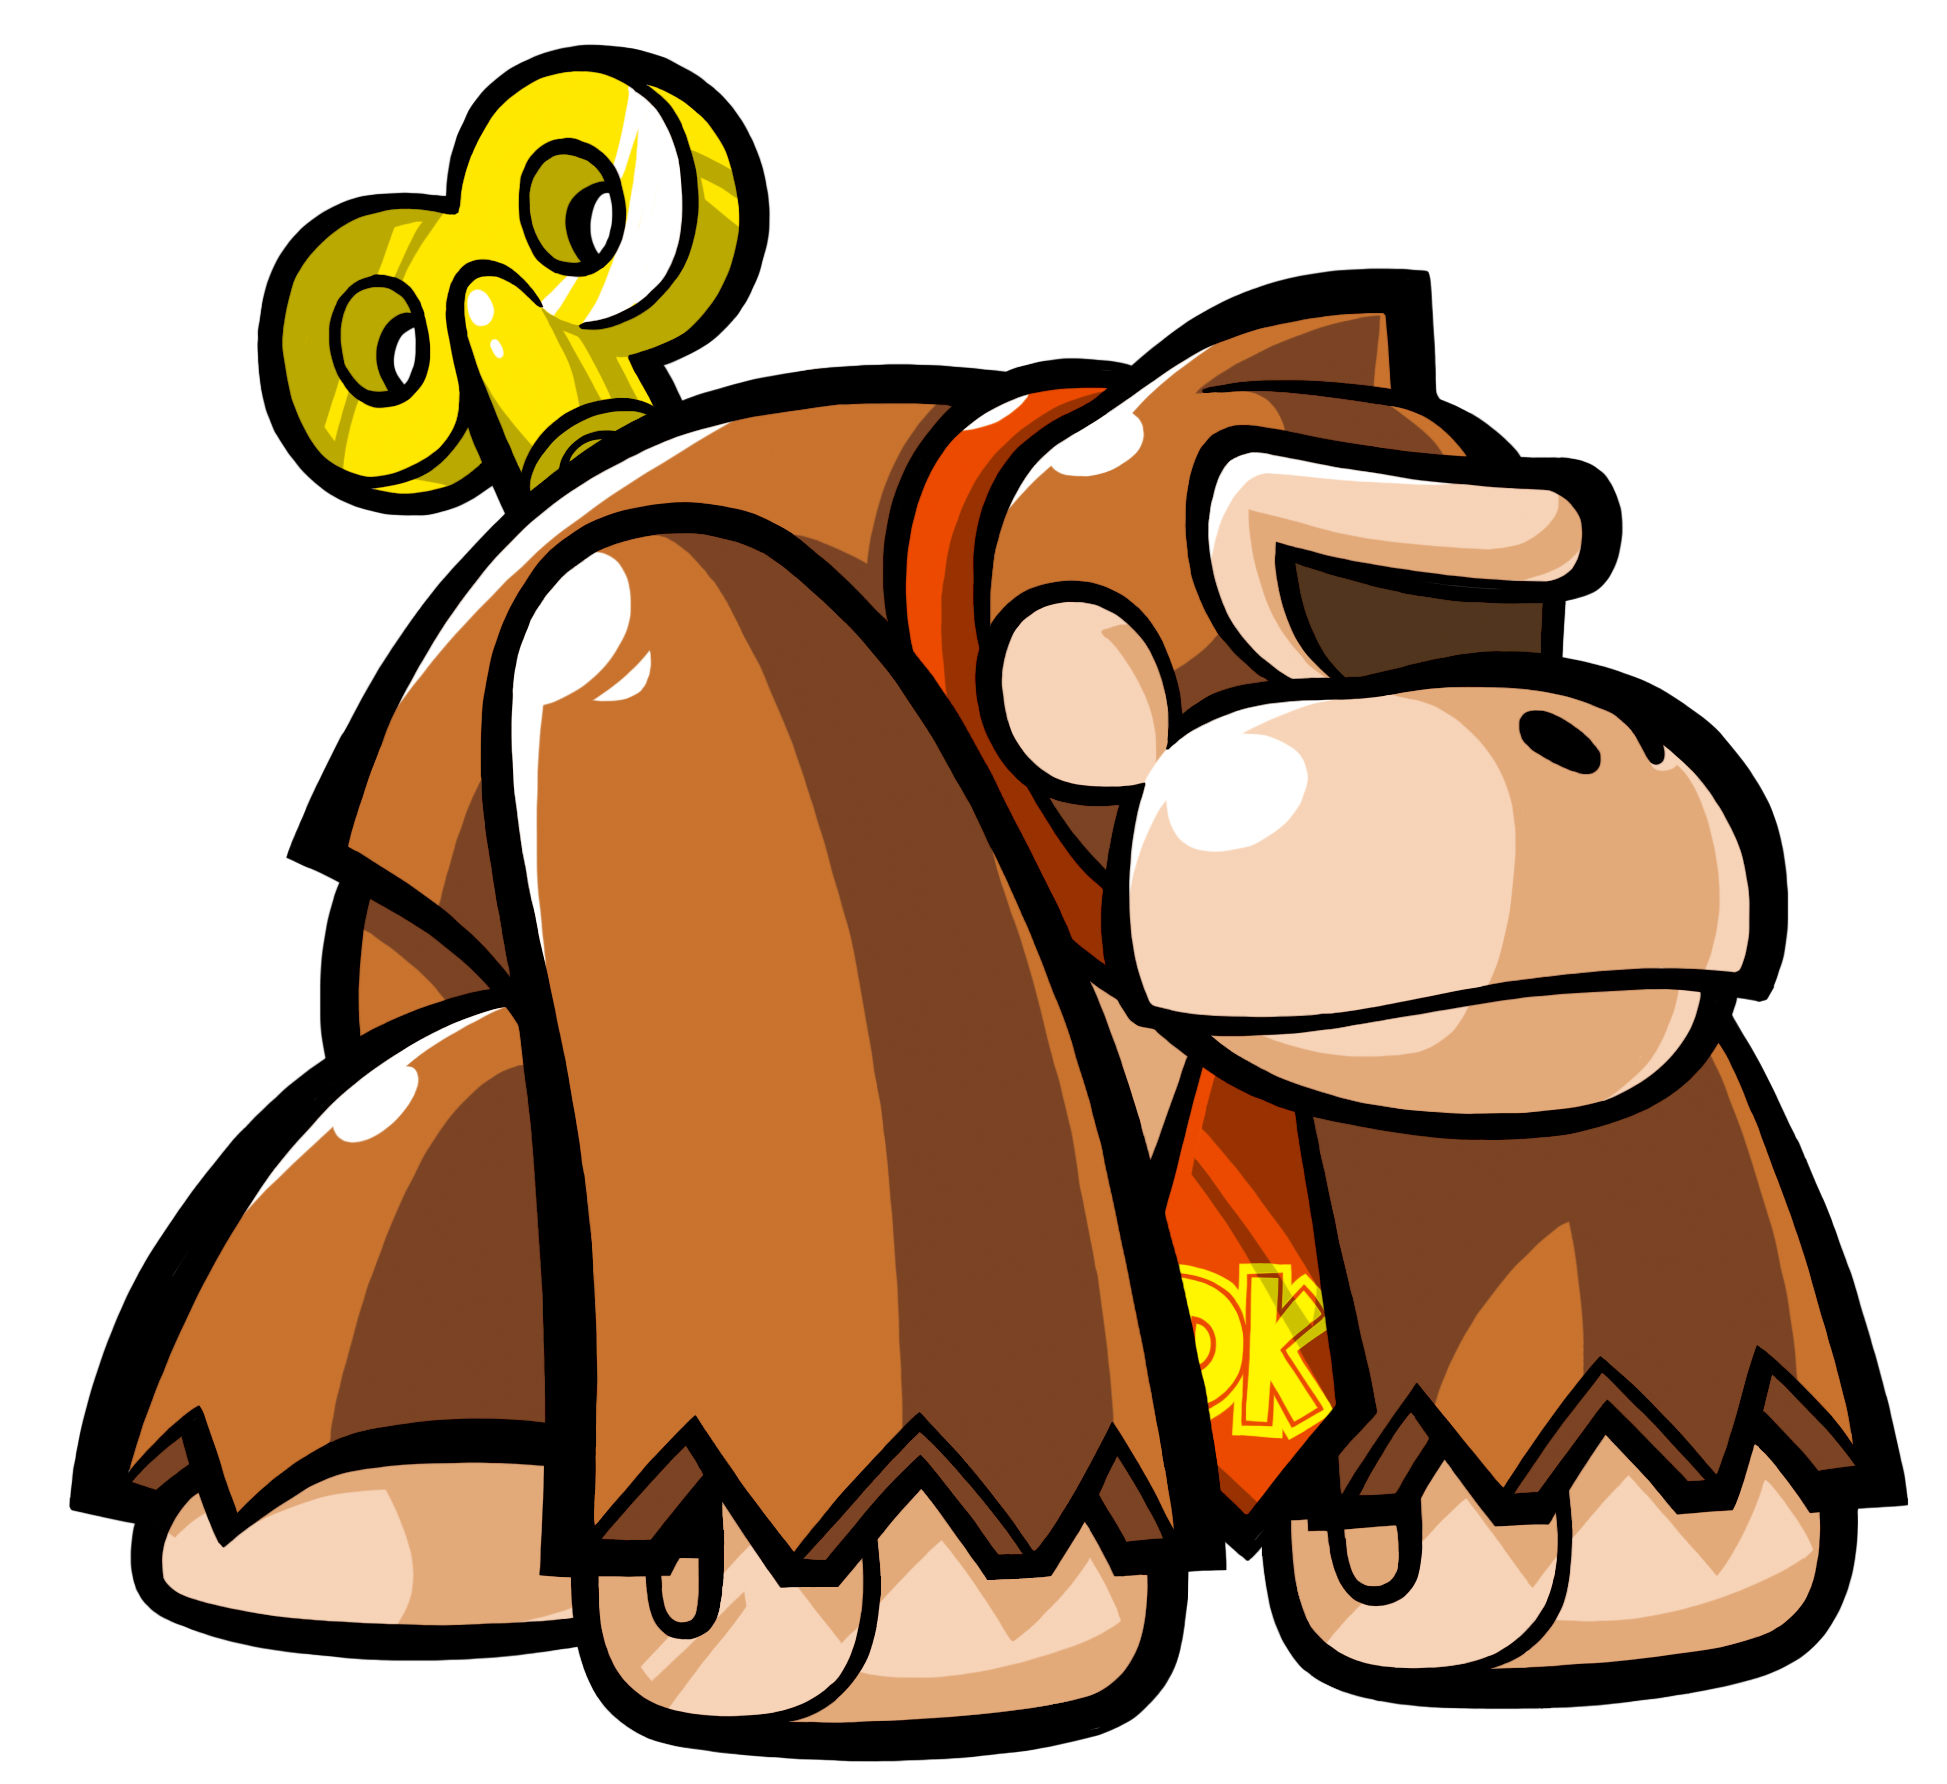 Mario Vs Donkey Kong PNG Image in Transparent pngteam.com